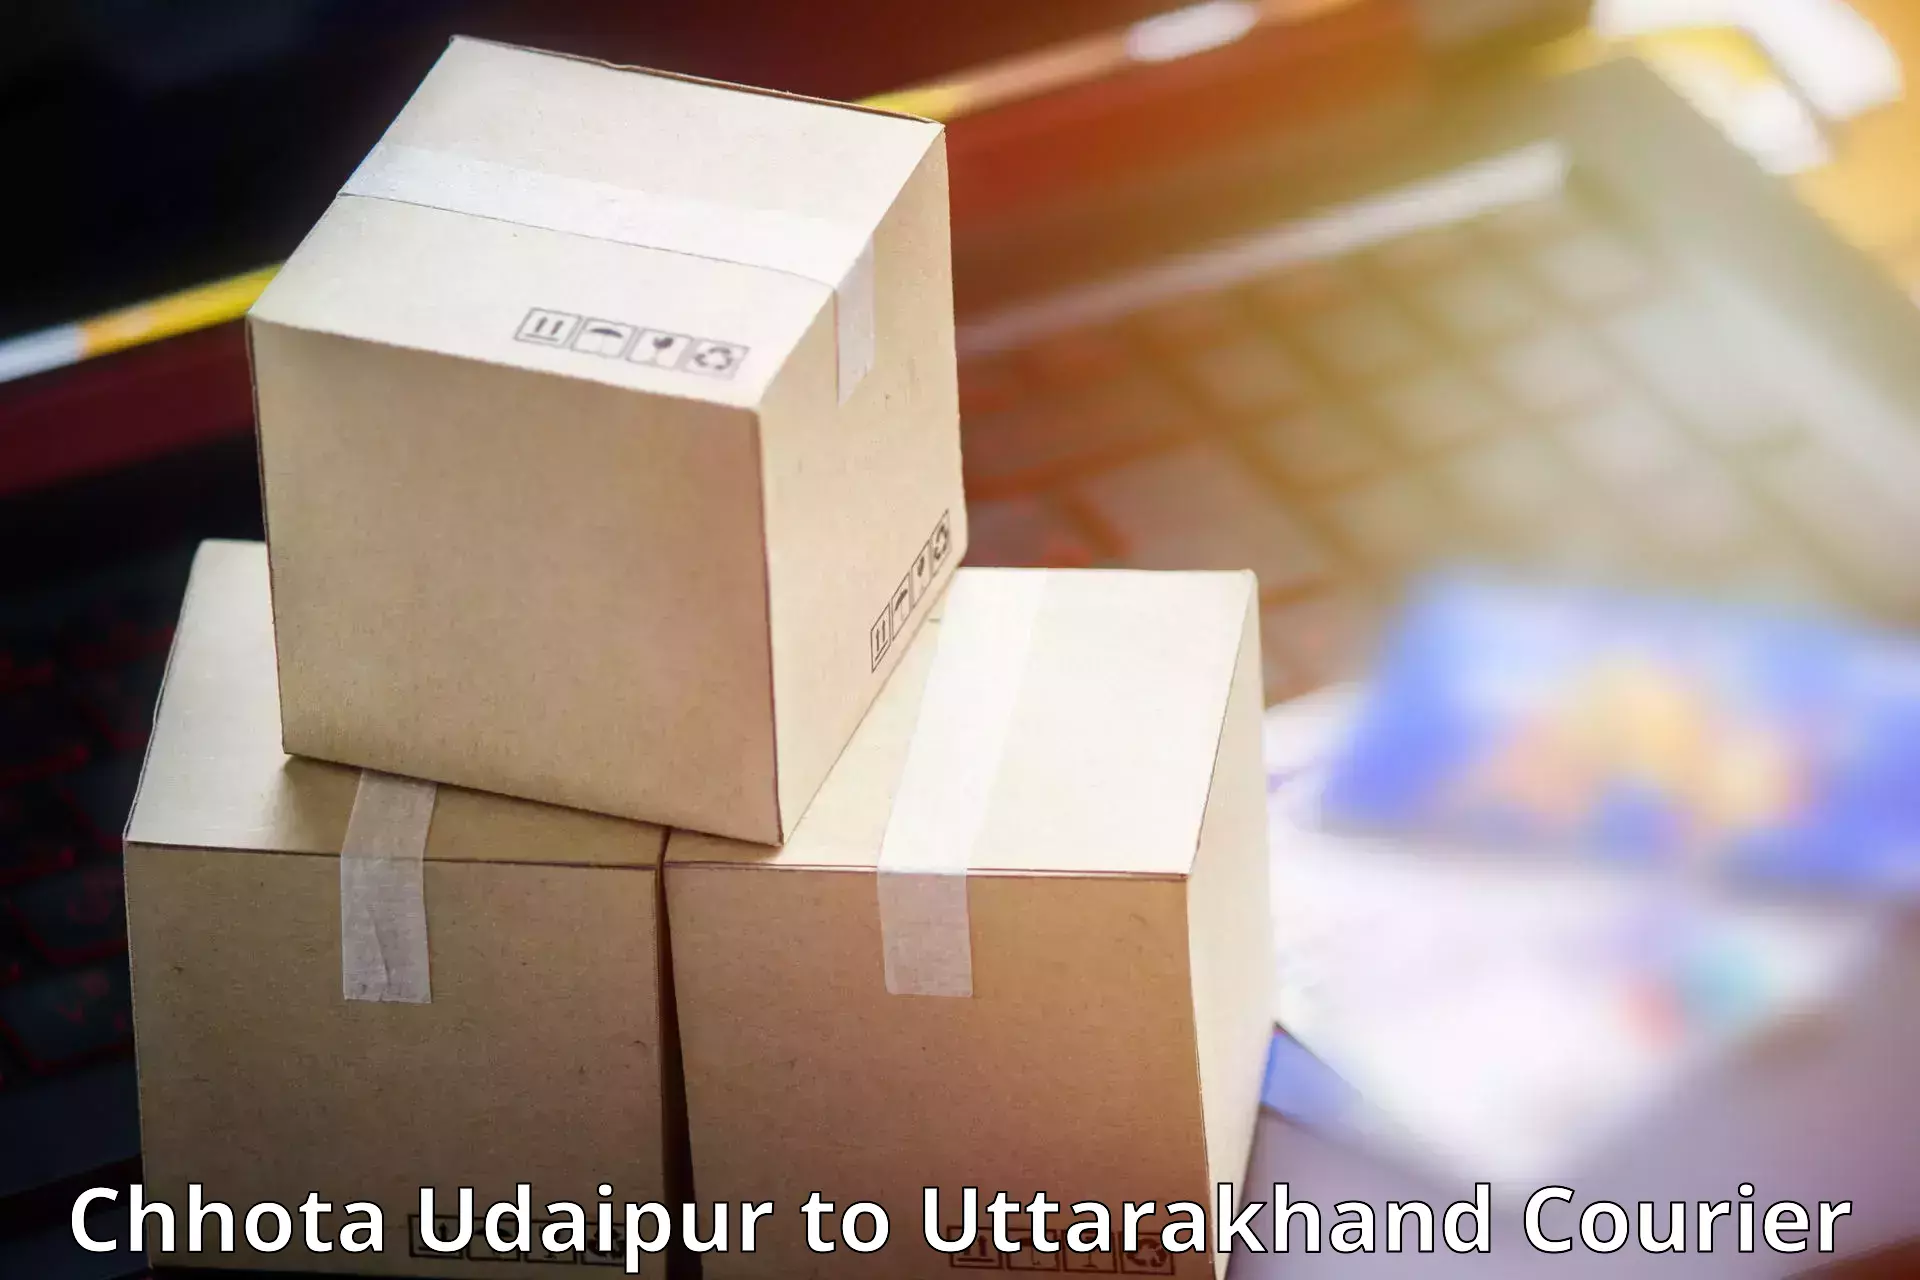 Express logistics providers Chhota Udaipur to Kotdwara